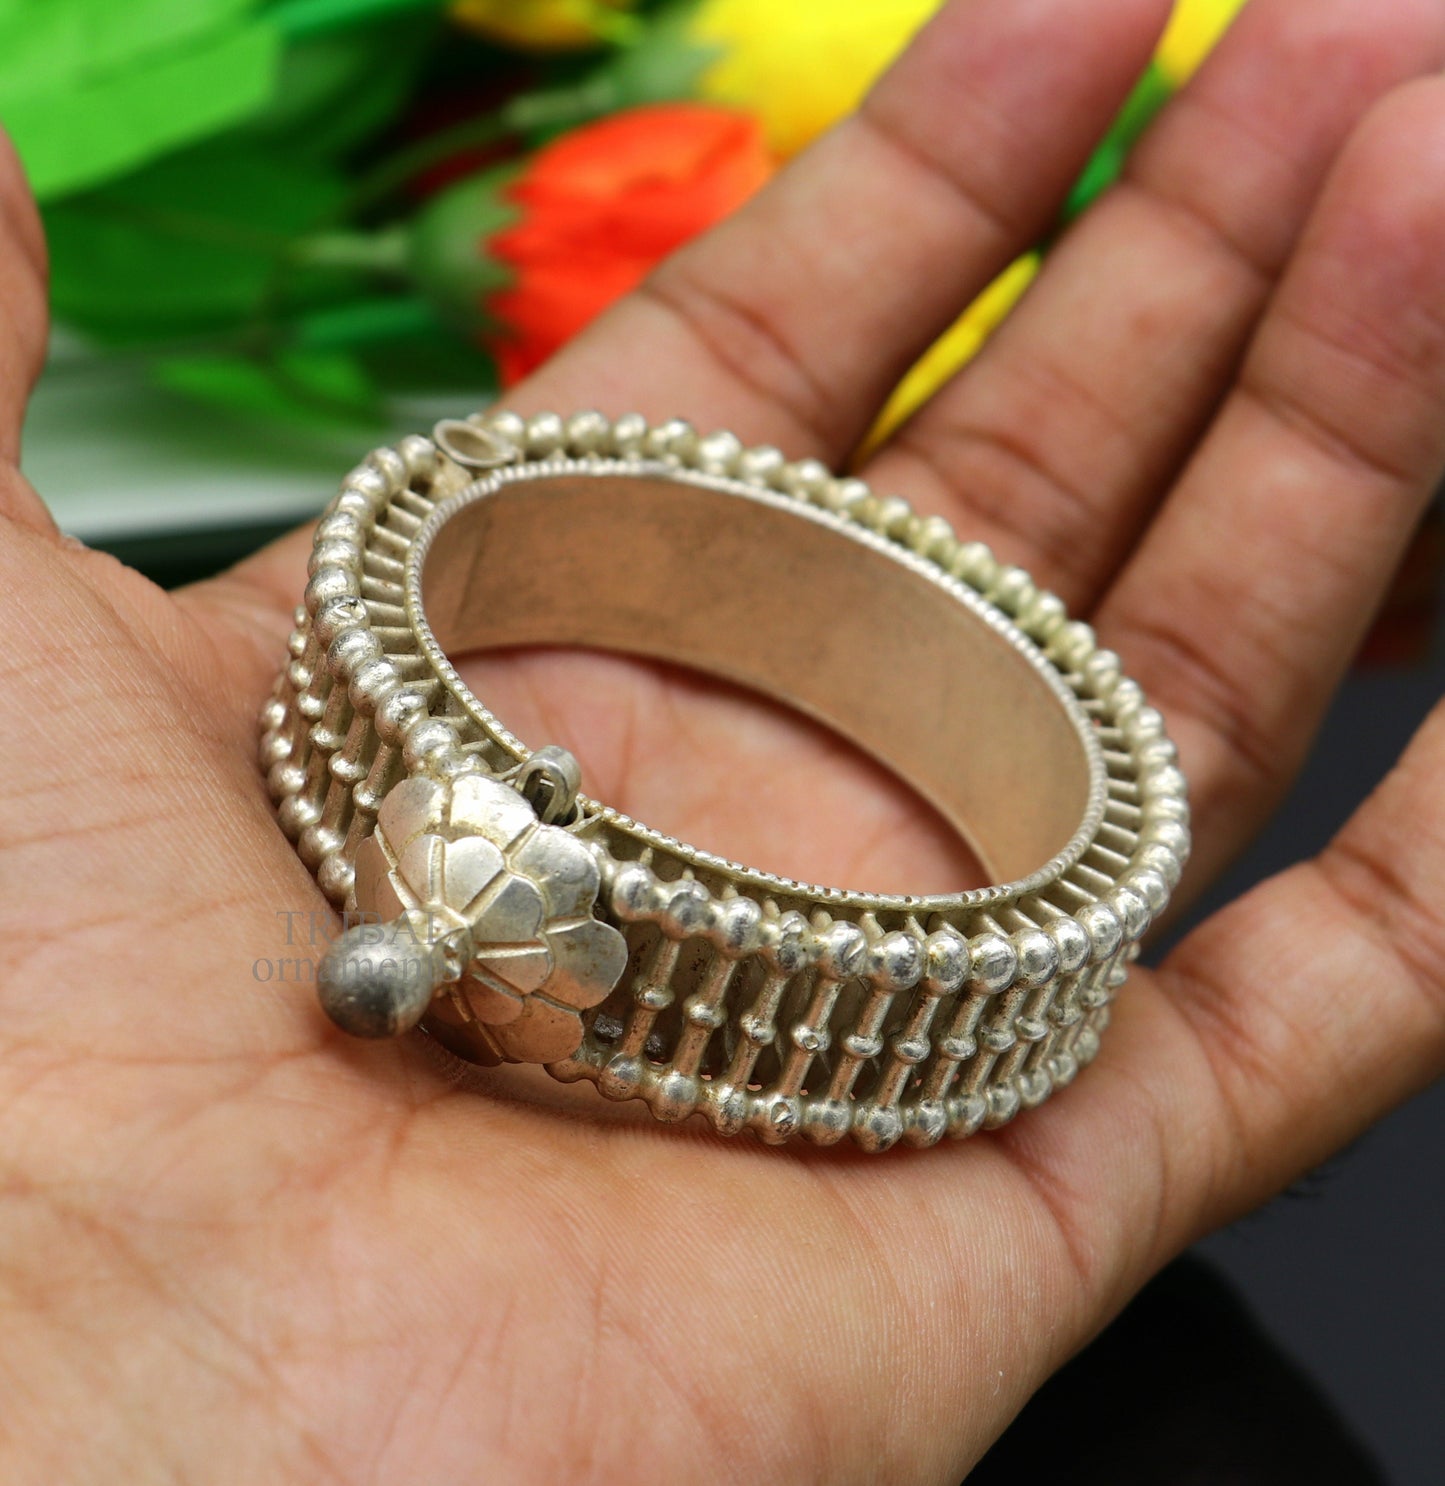 Amazing Vintage handmade original antique silver cuff bracelet , fabulous design tribal women's tribal ethnic jewelry Rajasthan India ocb21 - TRIBAL ORNAMENTS